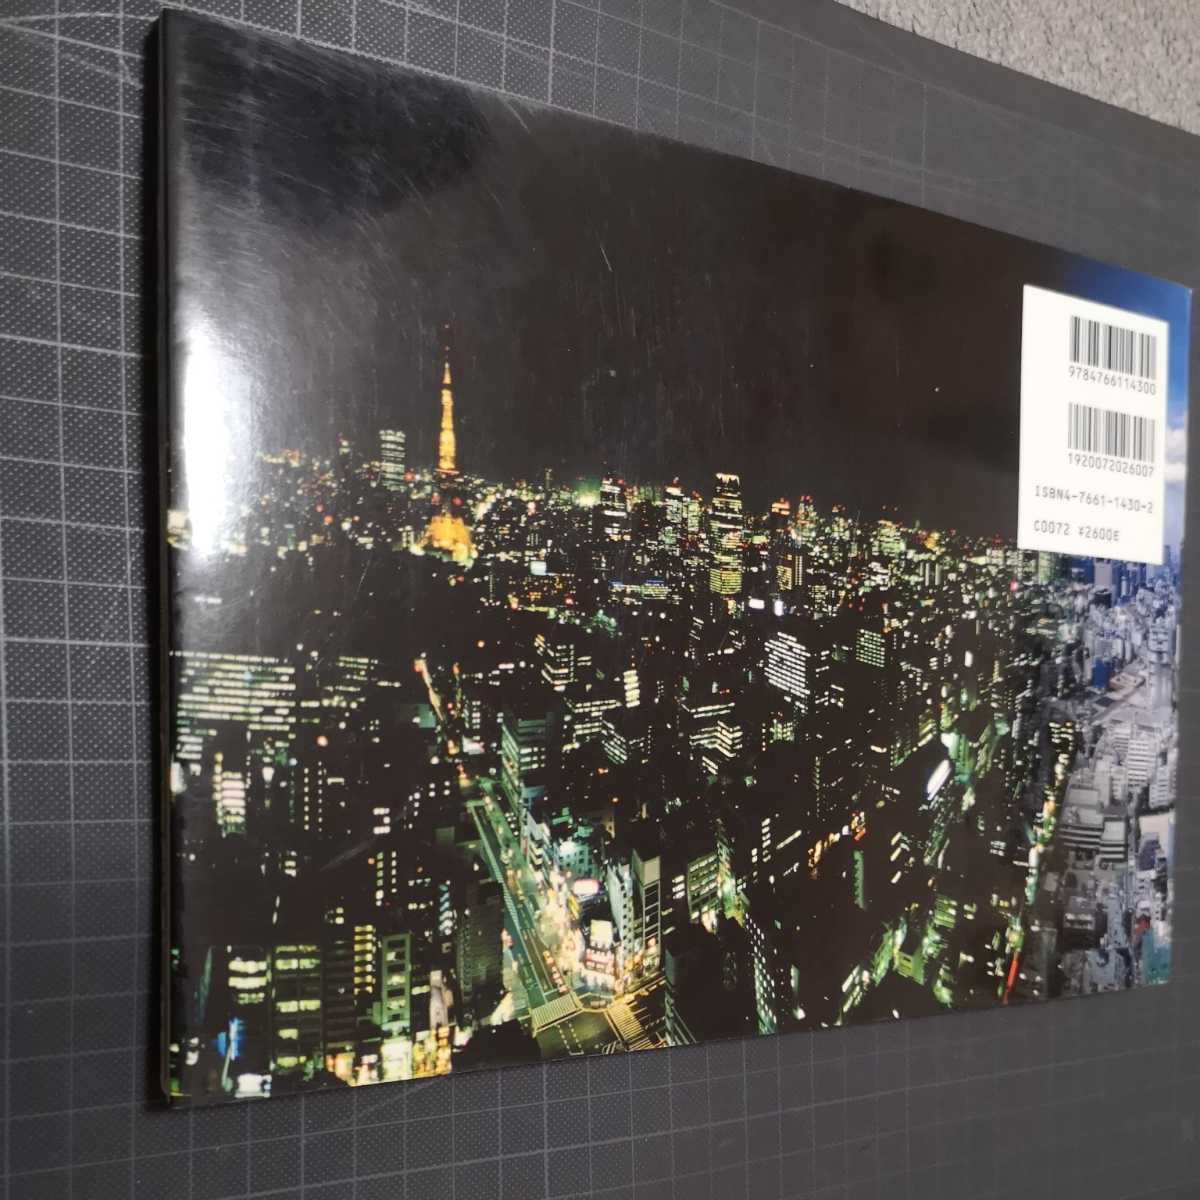 TOKYO 360°-Day&NIGHT ( супер panorama фото серии ) CD-ROM нераспечатанный 2003 год Tokyo 